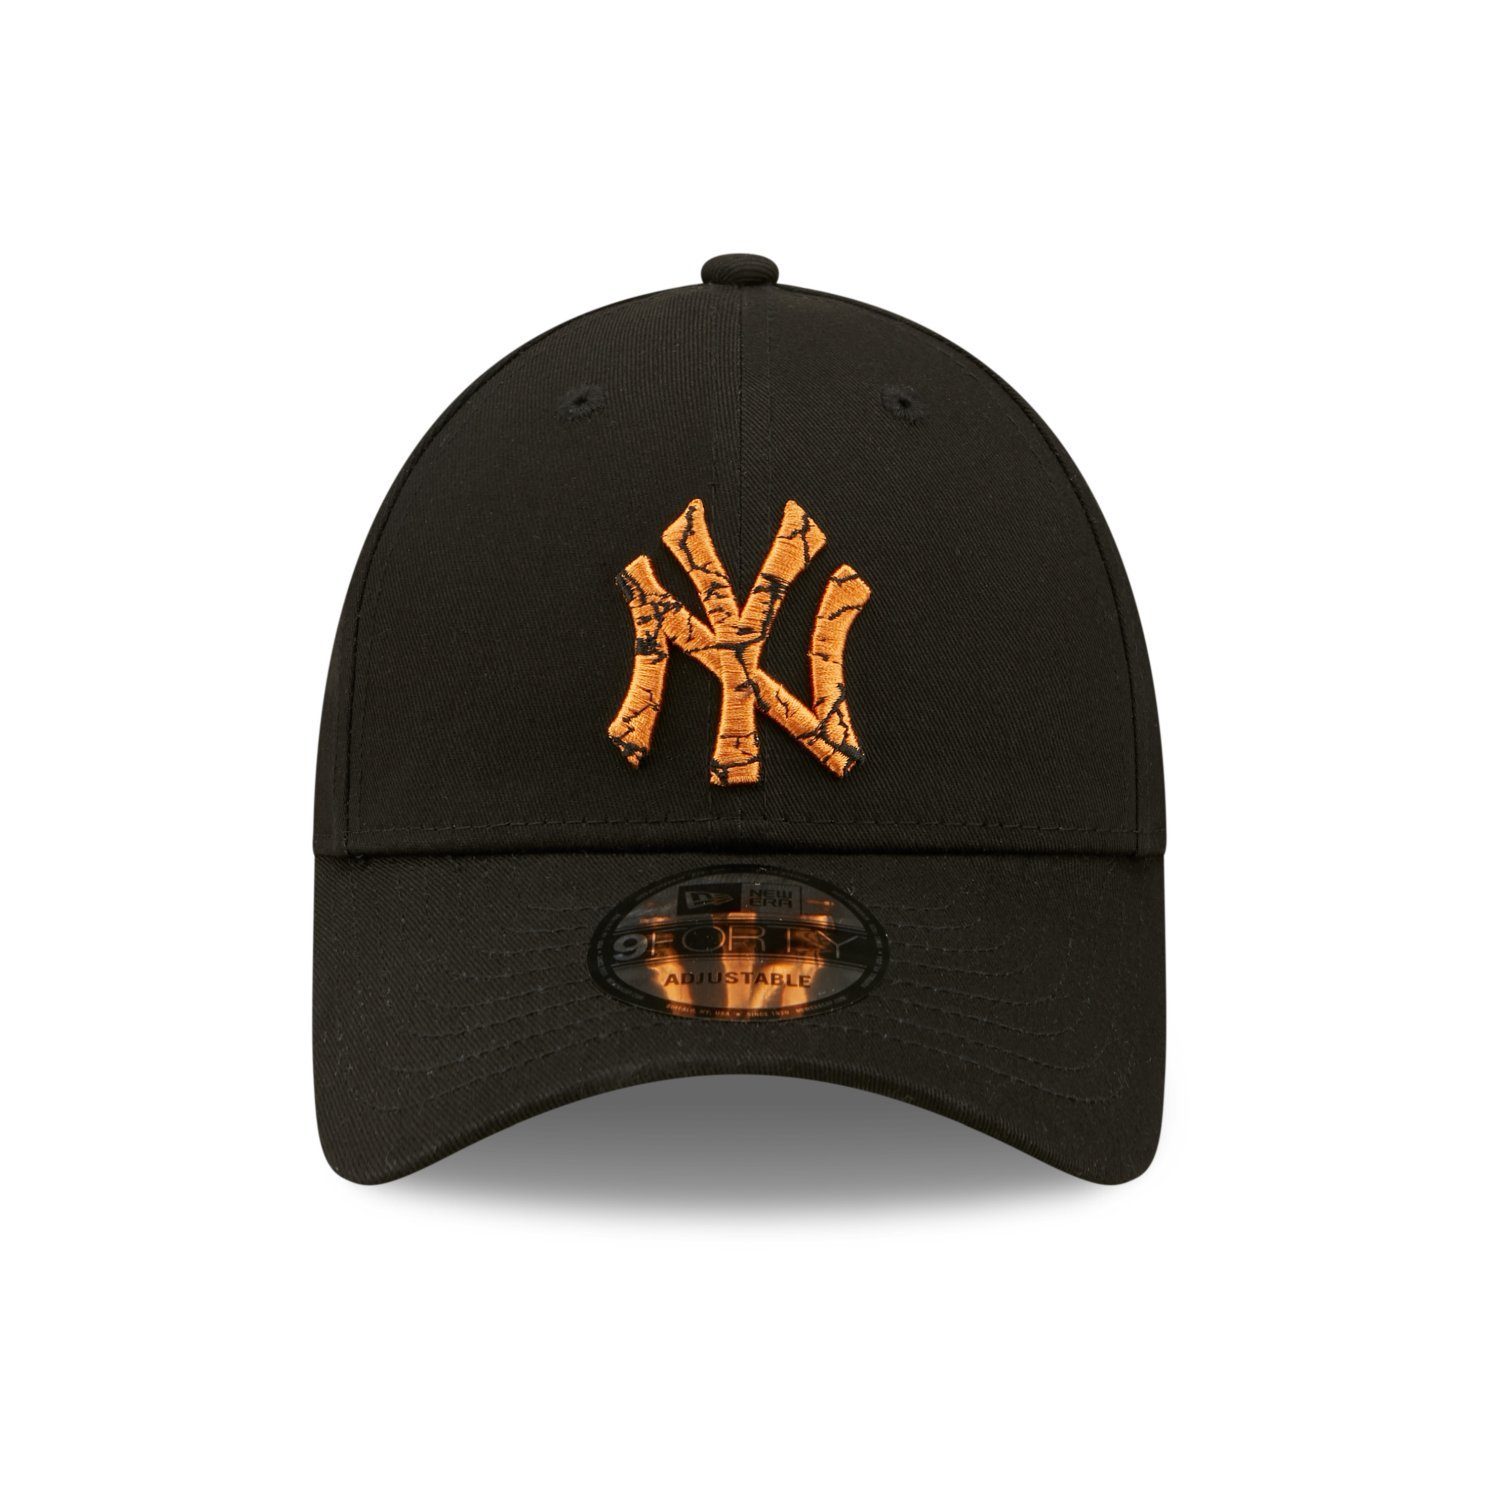 New New Cap Era Baseball Yankees York 9Forty MARBLE